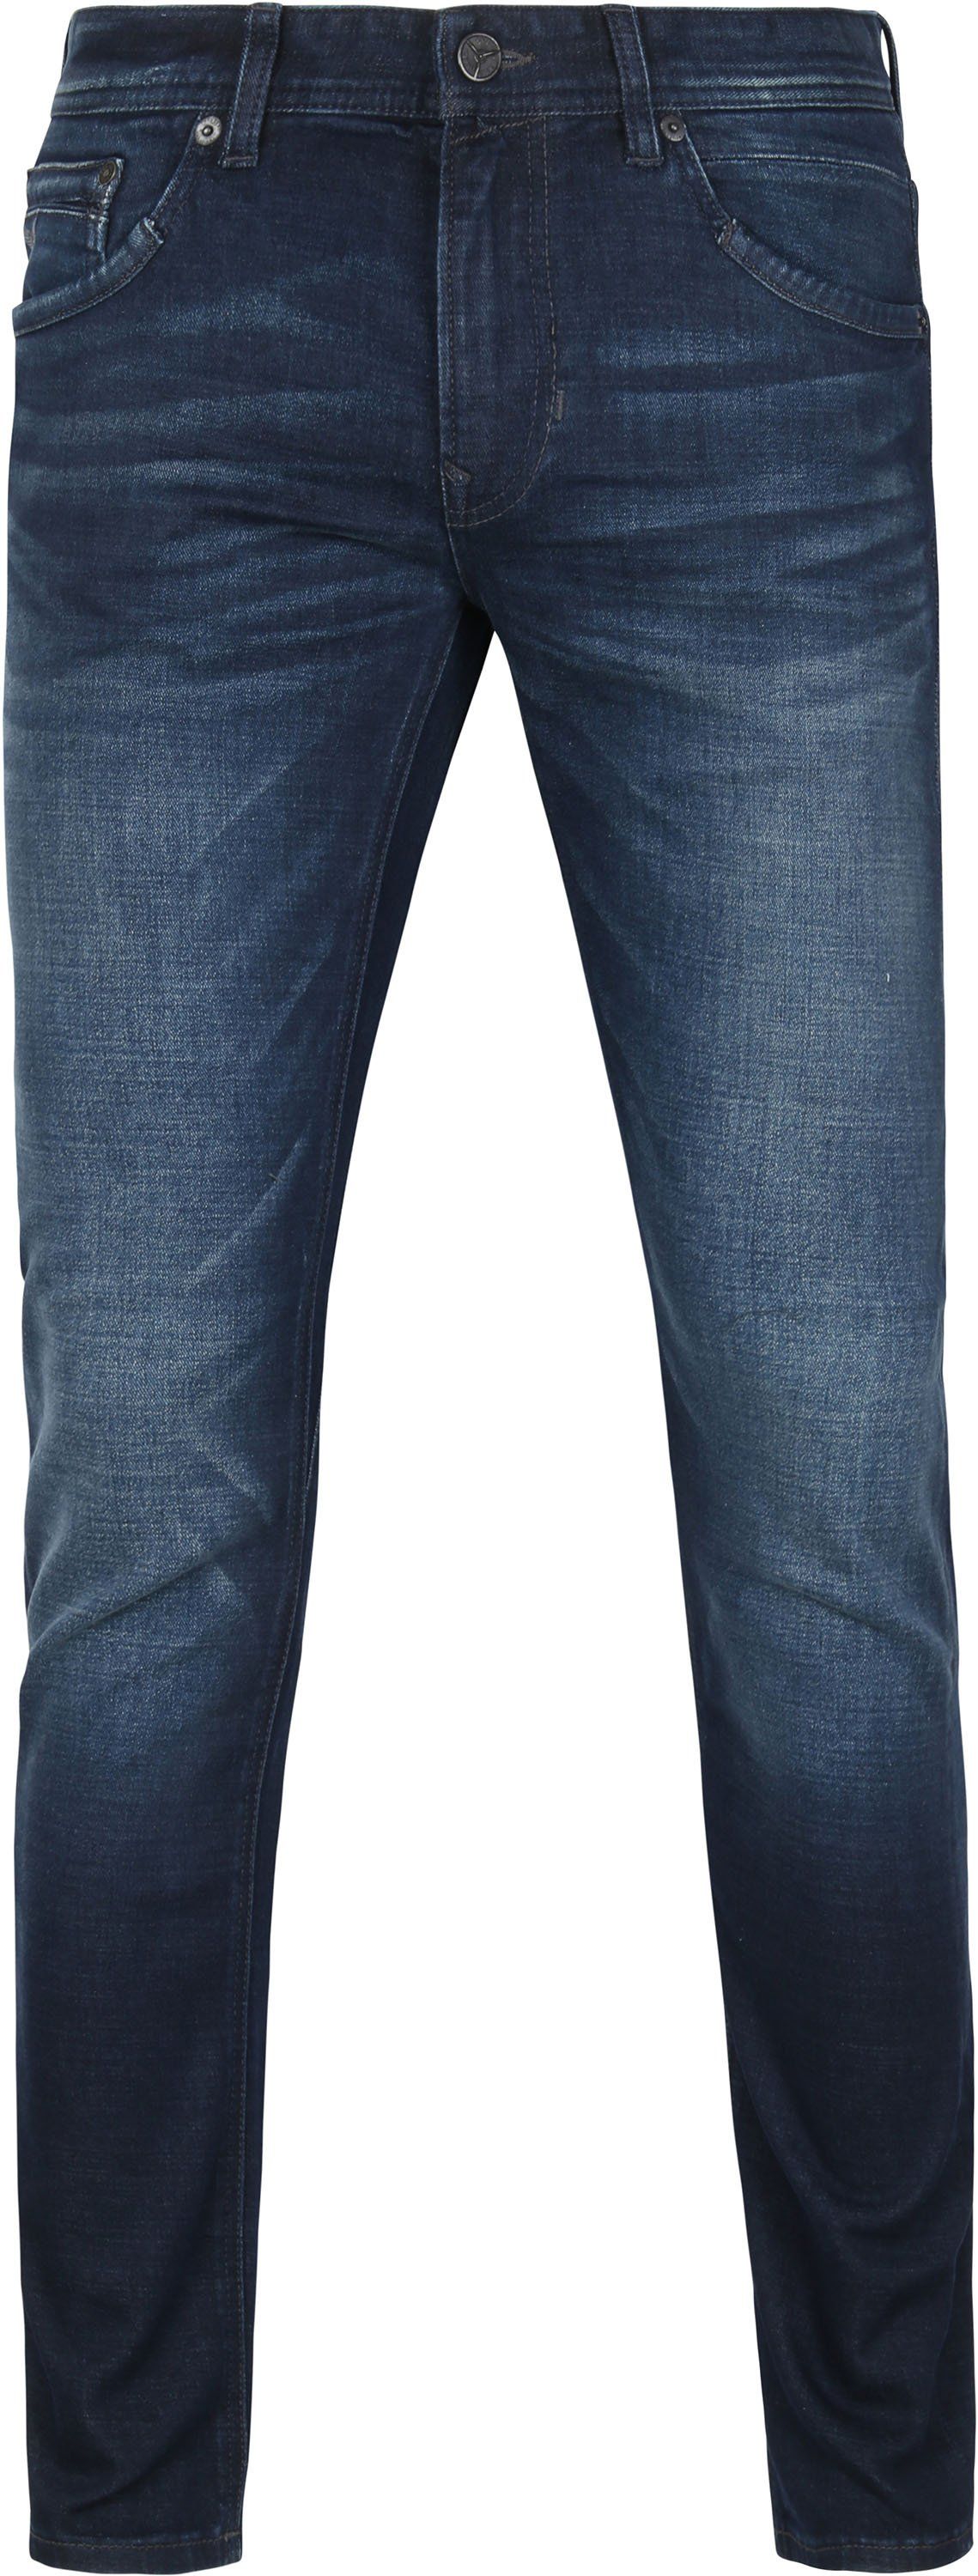 PME Legend Tailwheel Jeans Dark Shadow Blue Dark Blue size W 28